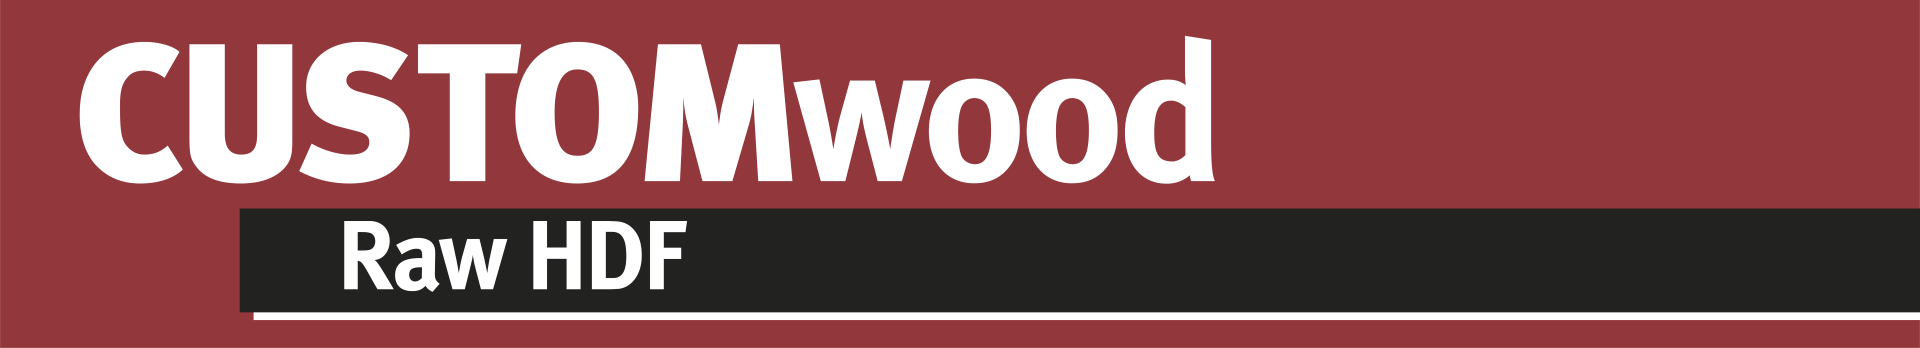 CUSTOMwood Raw HDF